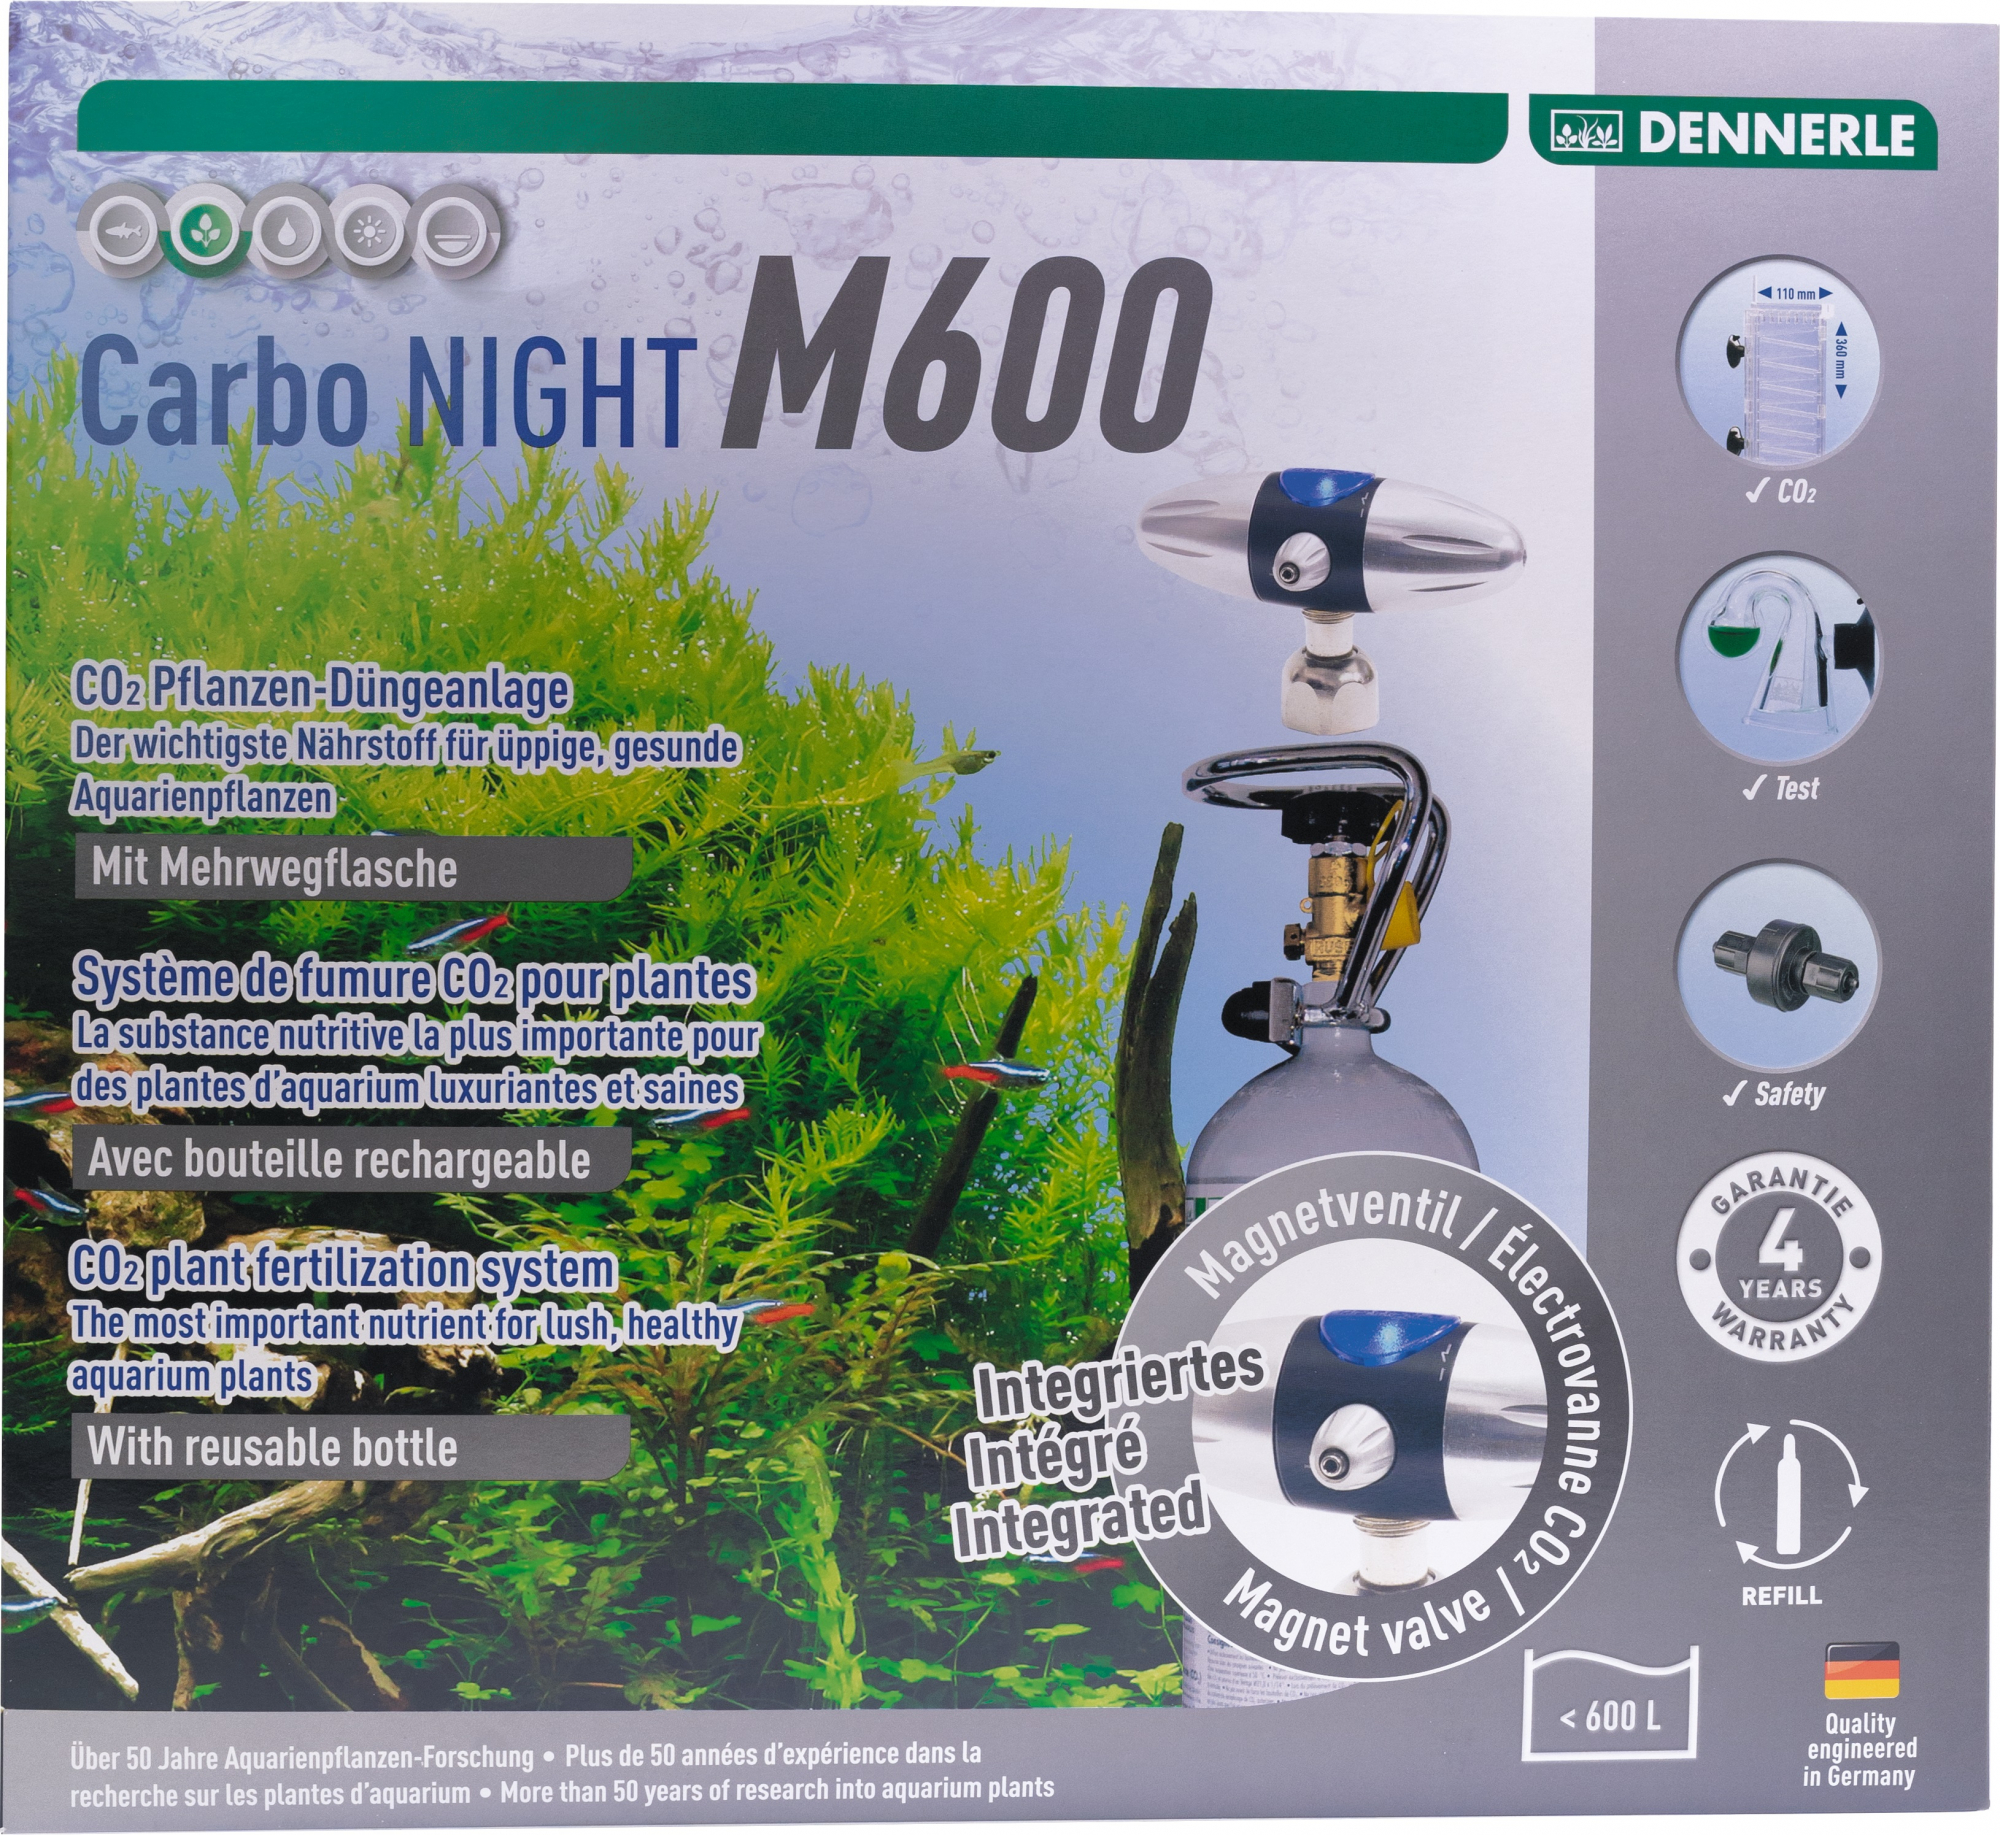 Conjunto de fertilizantes CO2 CarboNIGHT M600 RECARREGÁVEL